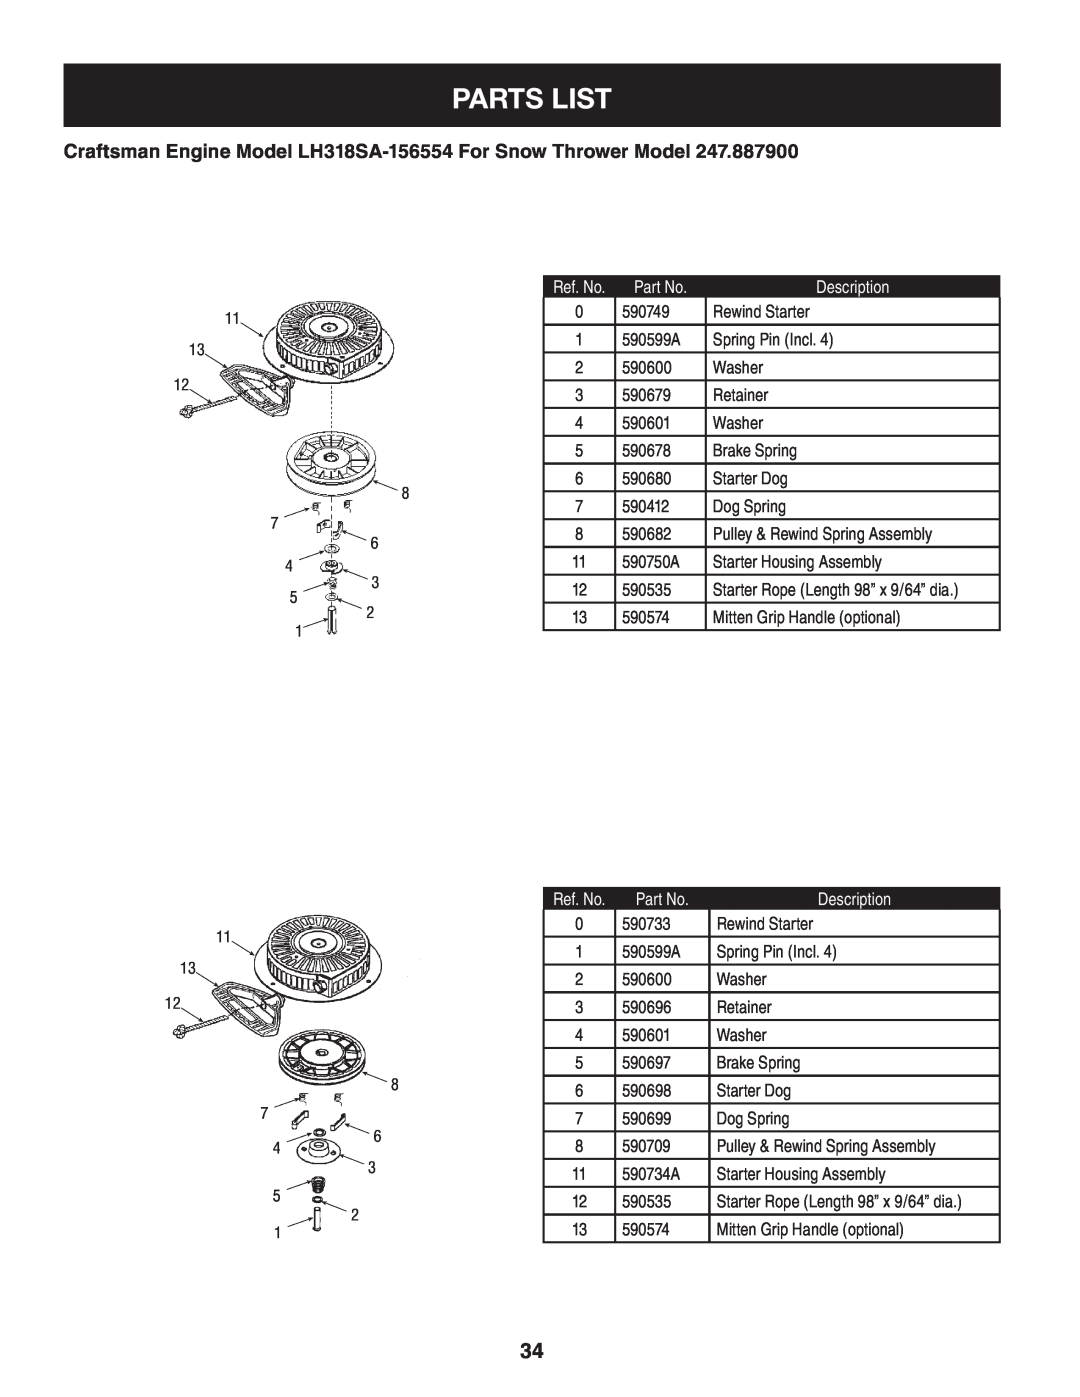 Sears 247.8879 Parts List, Craftsman Engine Model LH318SA-156554 For Snow Thrower Model, Description, Rewind Starter 